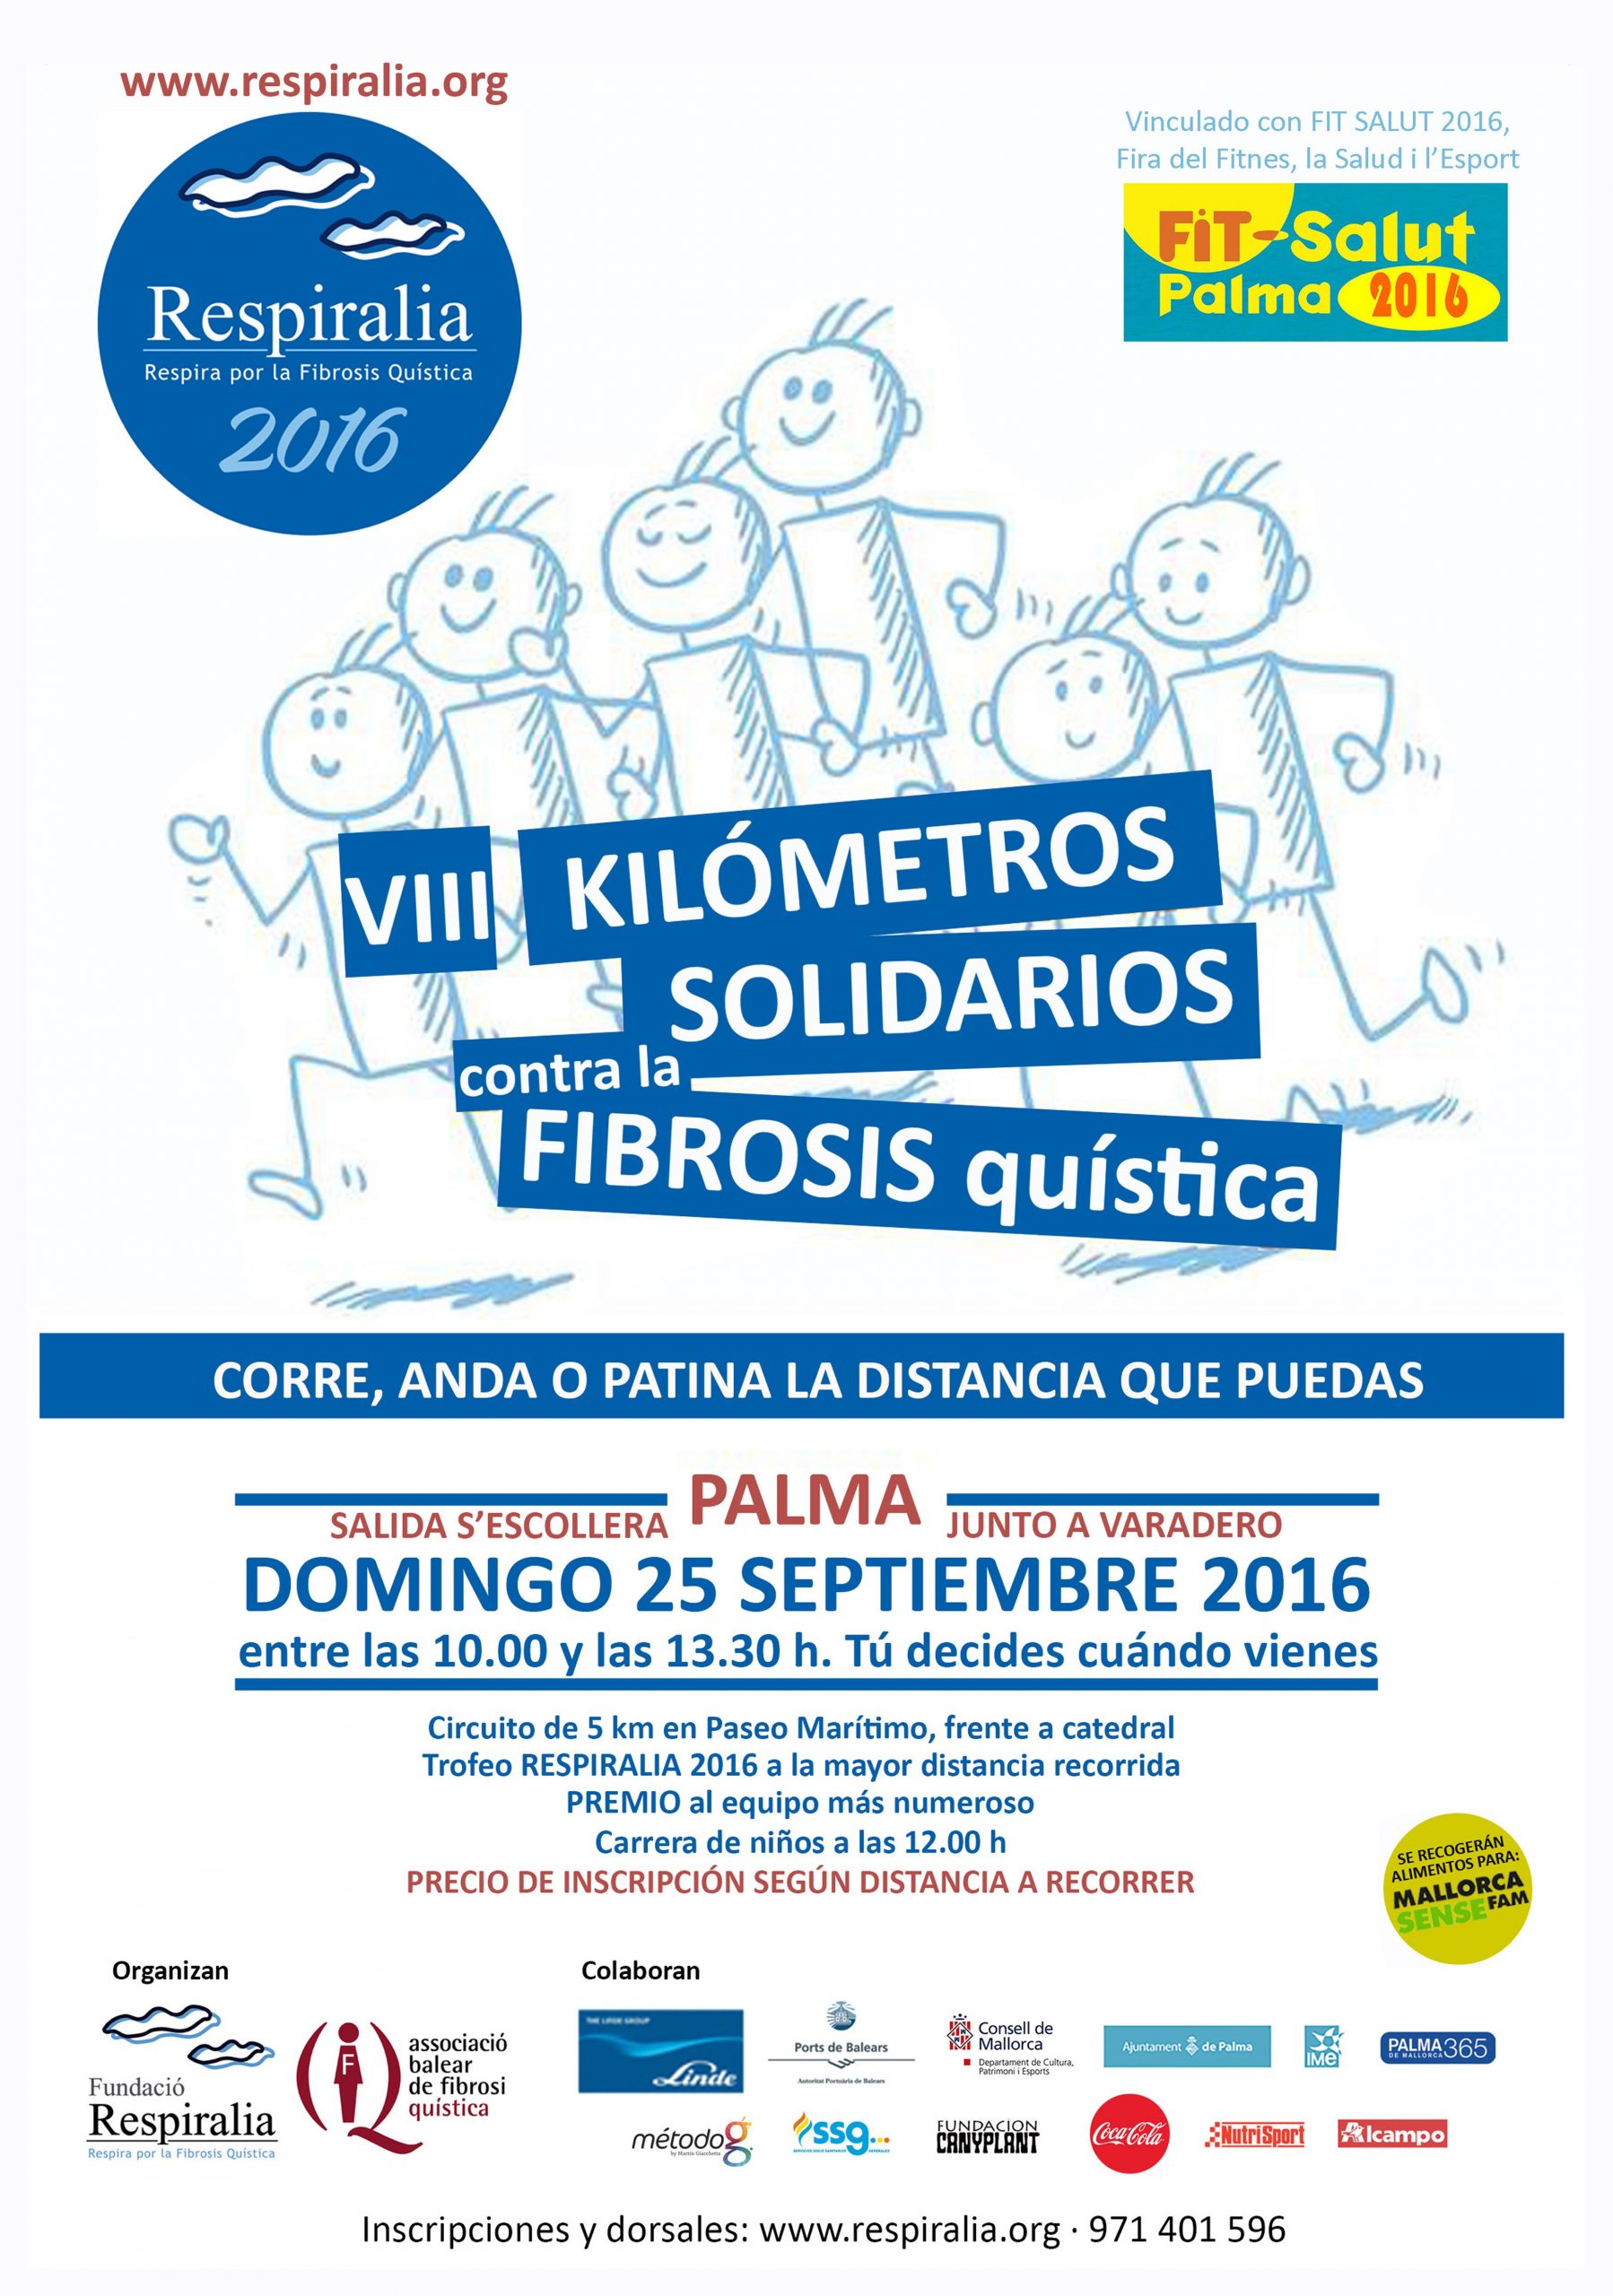 federacion española fibrosis quistica kilometros solidarios contra la fibrosis quistica scaled